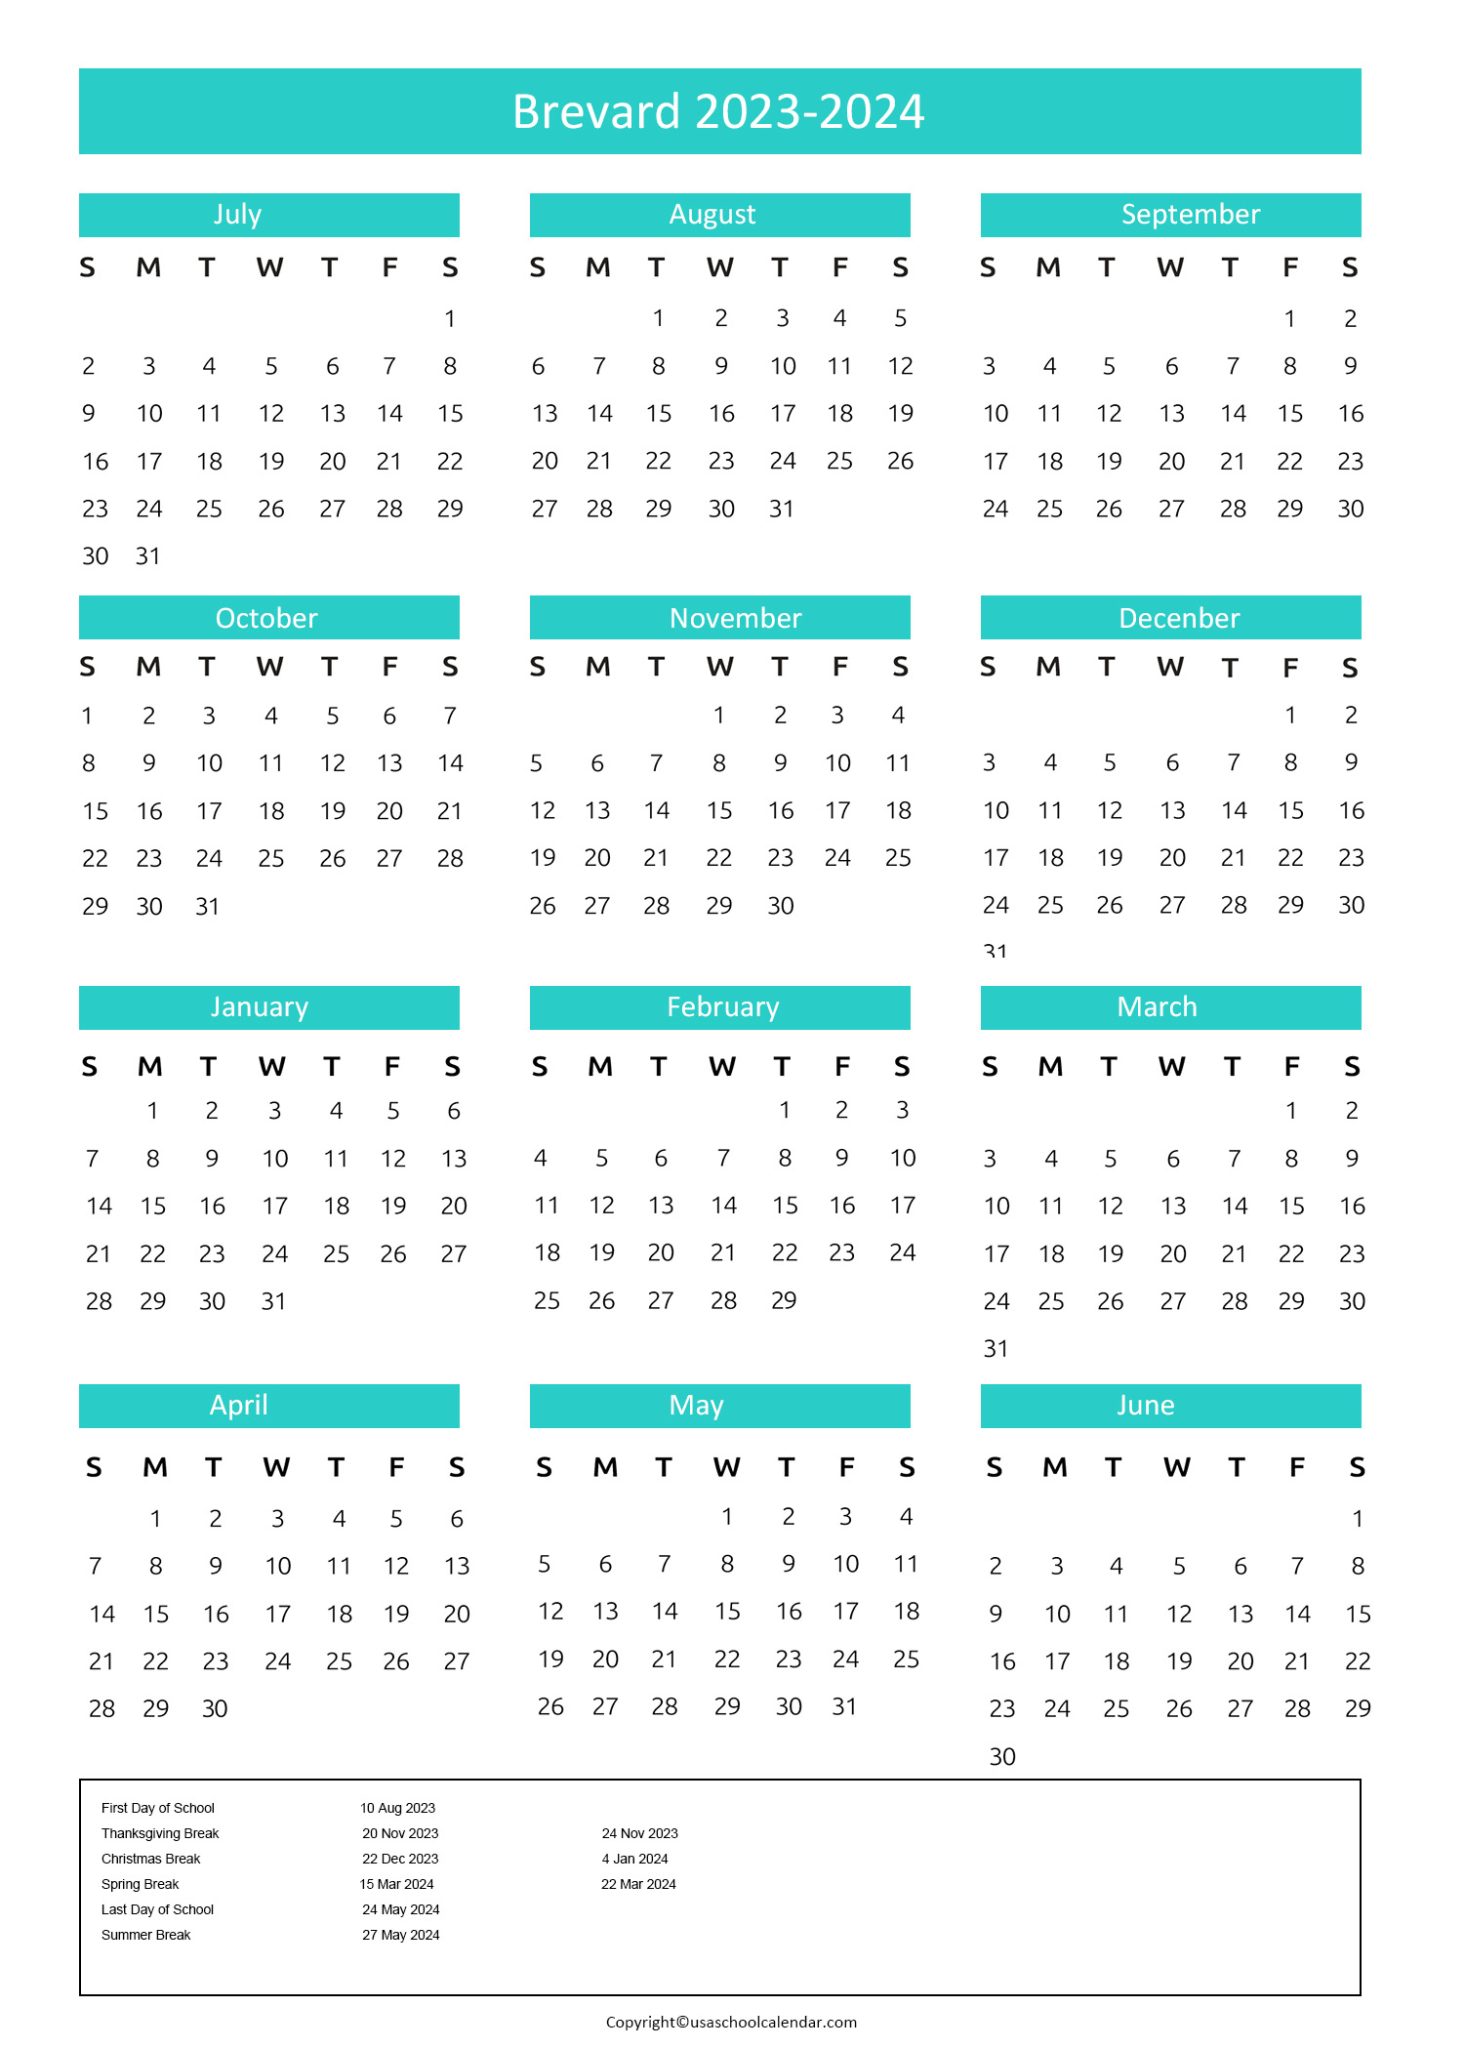 Brevard County Schools Calendar & Holidays 2023-2024